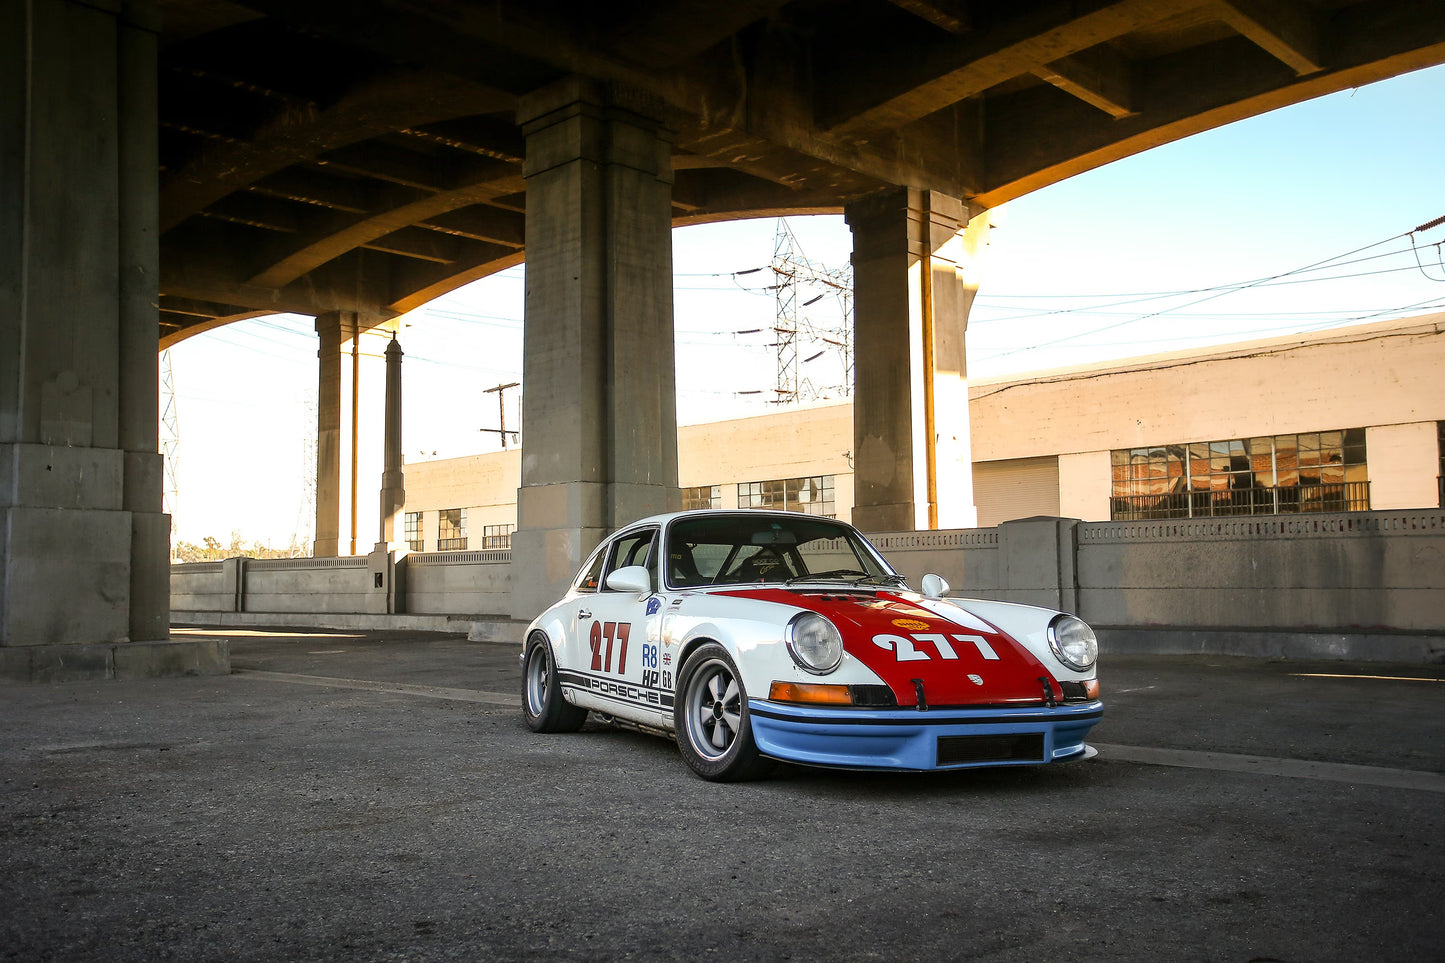 Iconic 277 Porsche Underneath 6th Street Bridge